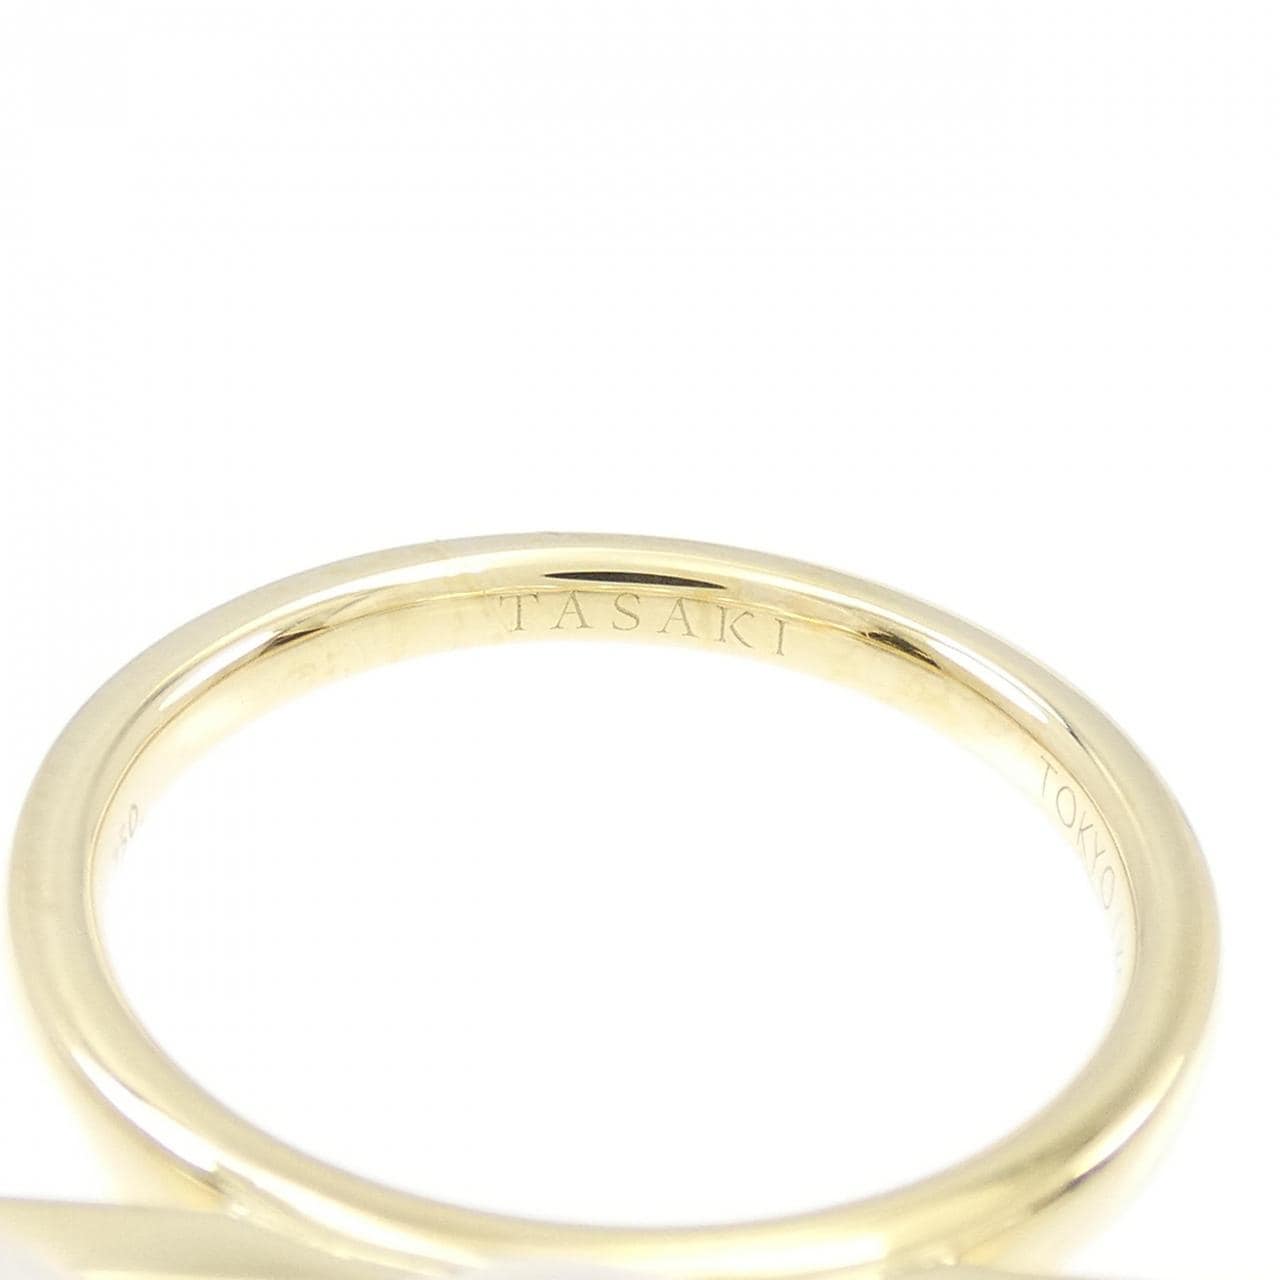 Tasaki balance signature ring